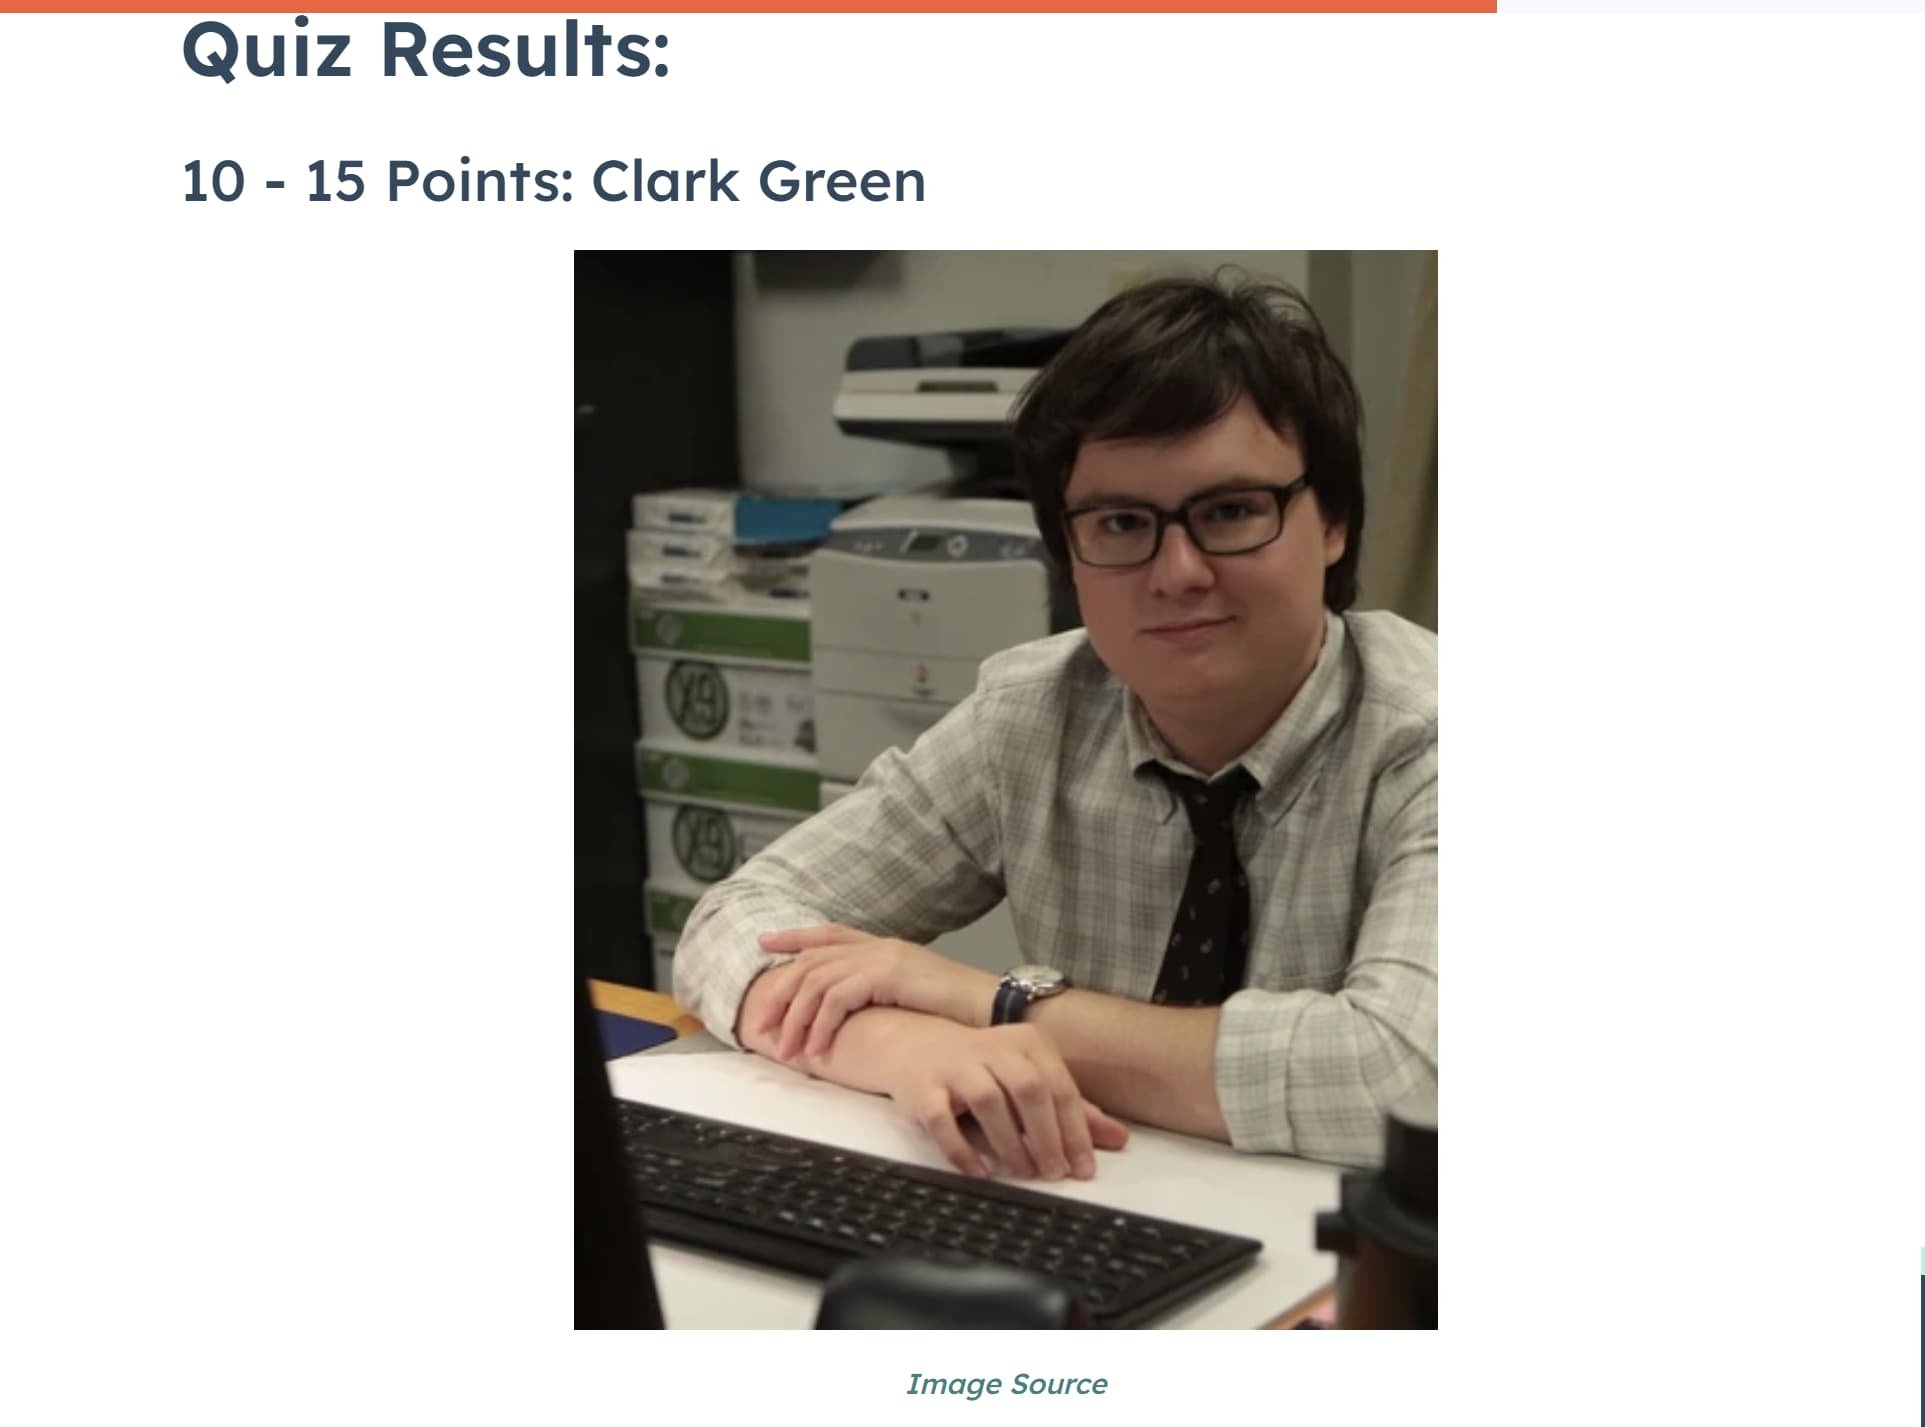 Tangkapan layar jawaban dari kuis "The Office" kami, yang menampilkan gambar Clark Green.